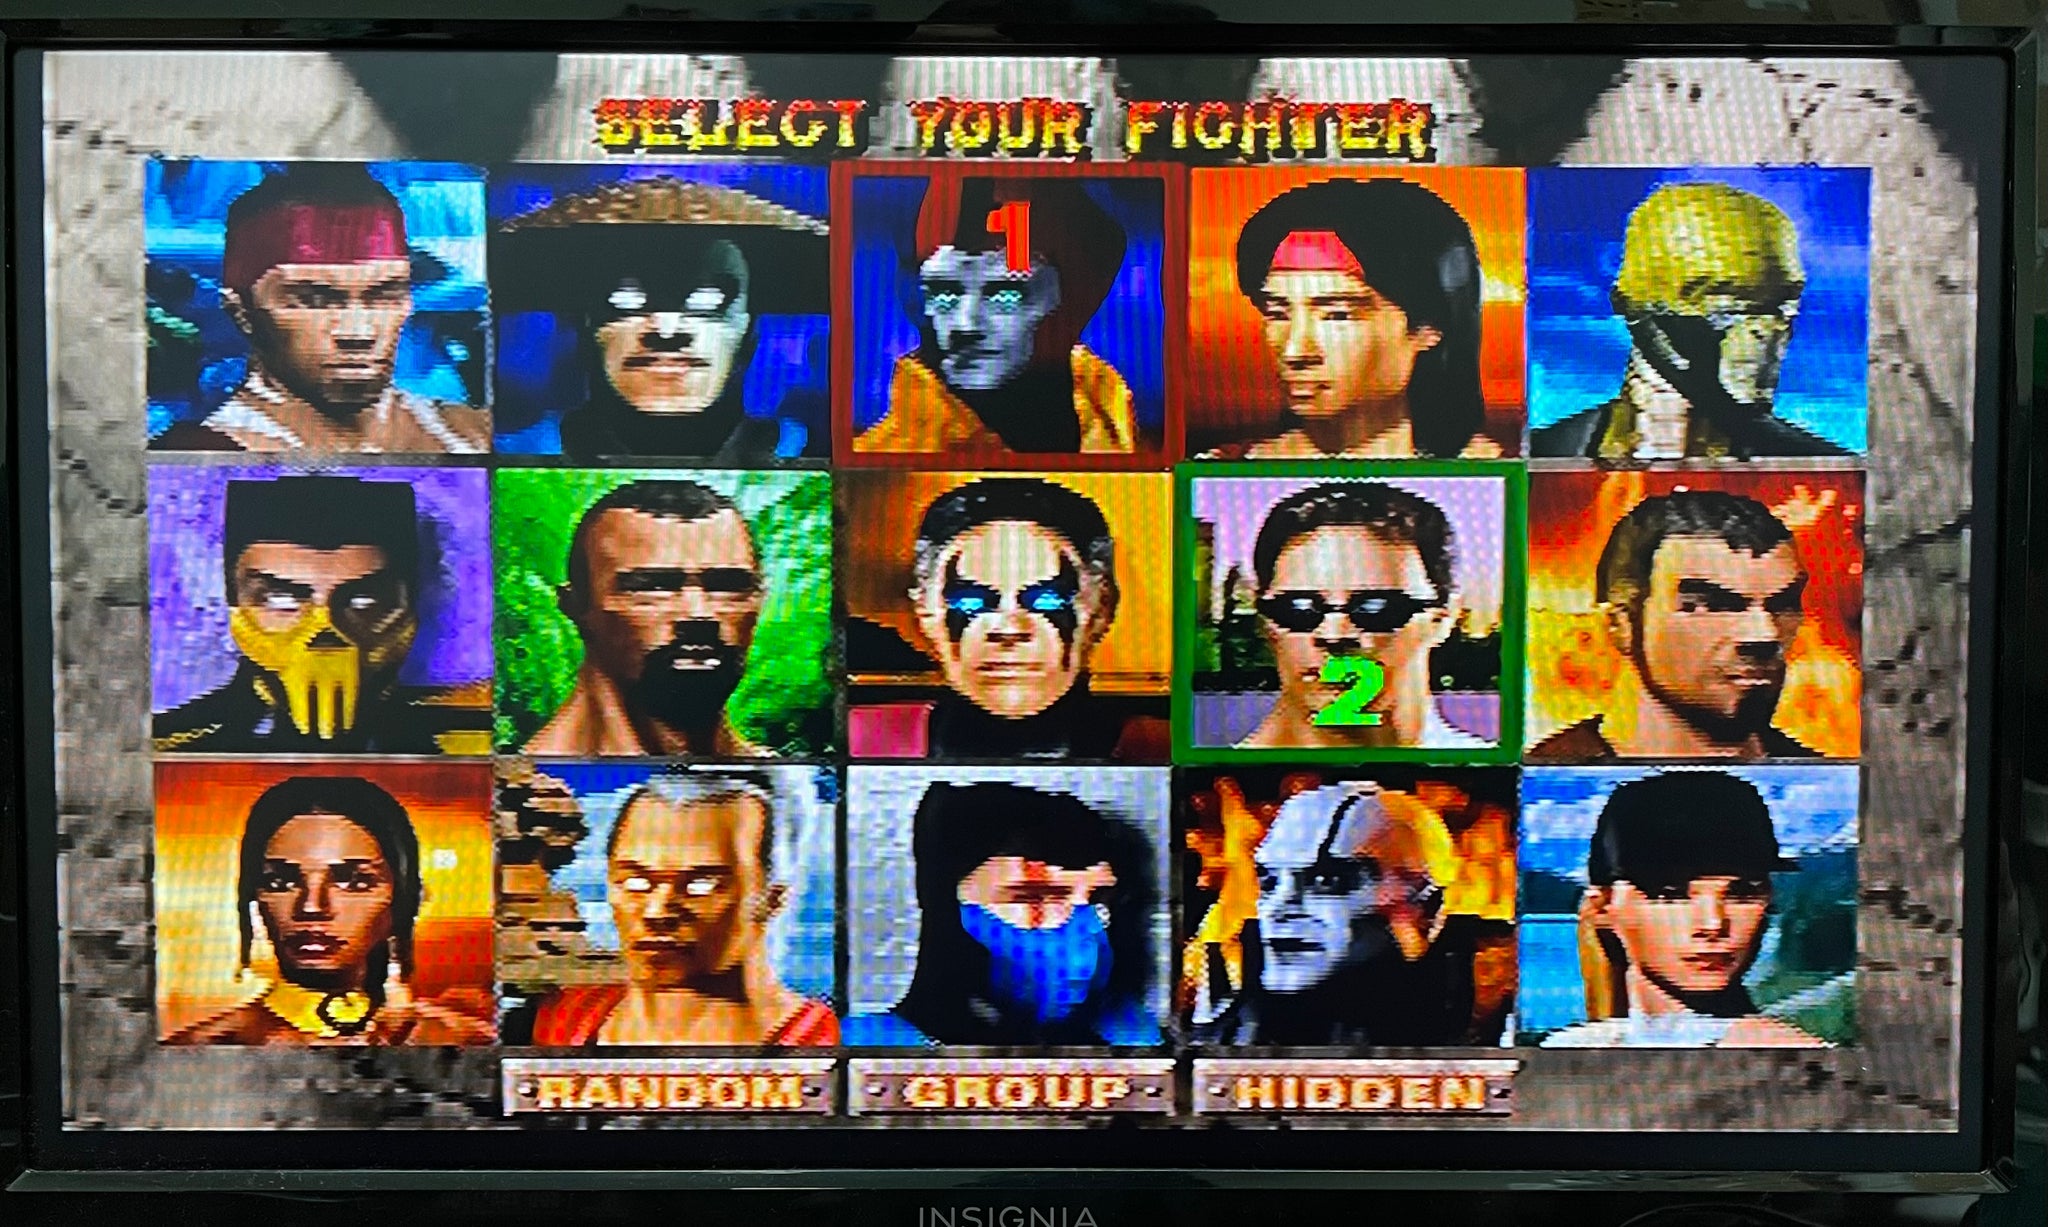 Gaming Relics - Nintendo 64 - Mortal Kombat 4